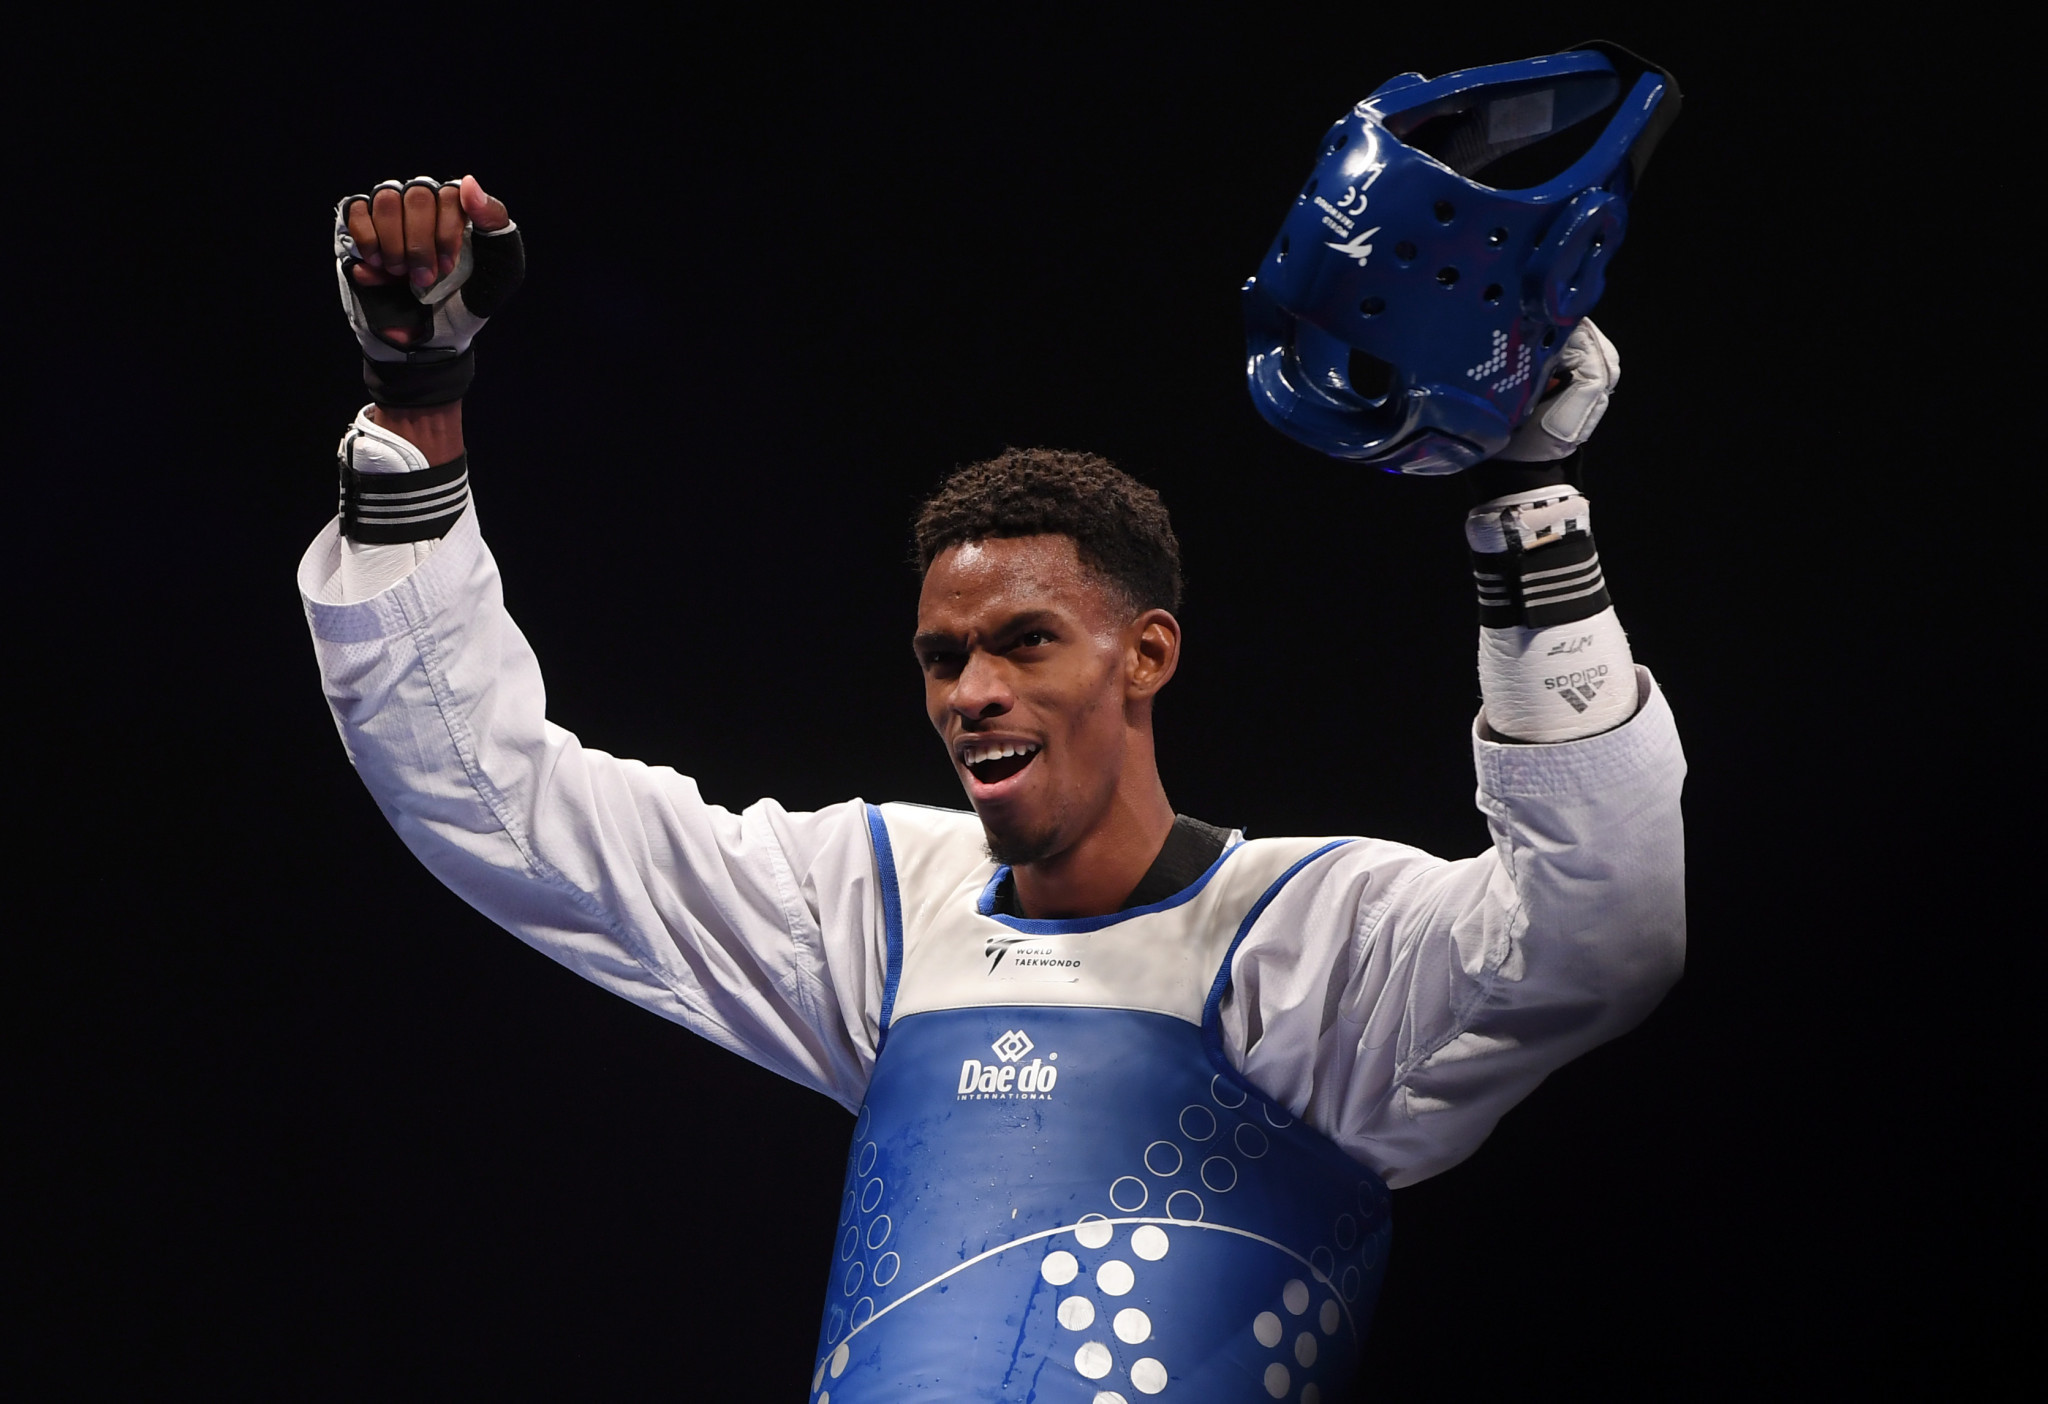 World champion Alba seals Tokyo 2020 berth at Pan American Olympic taekwondo qualifier